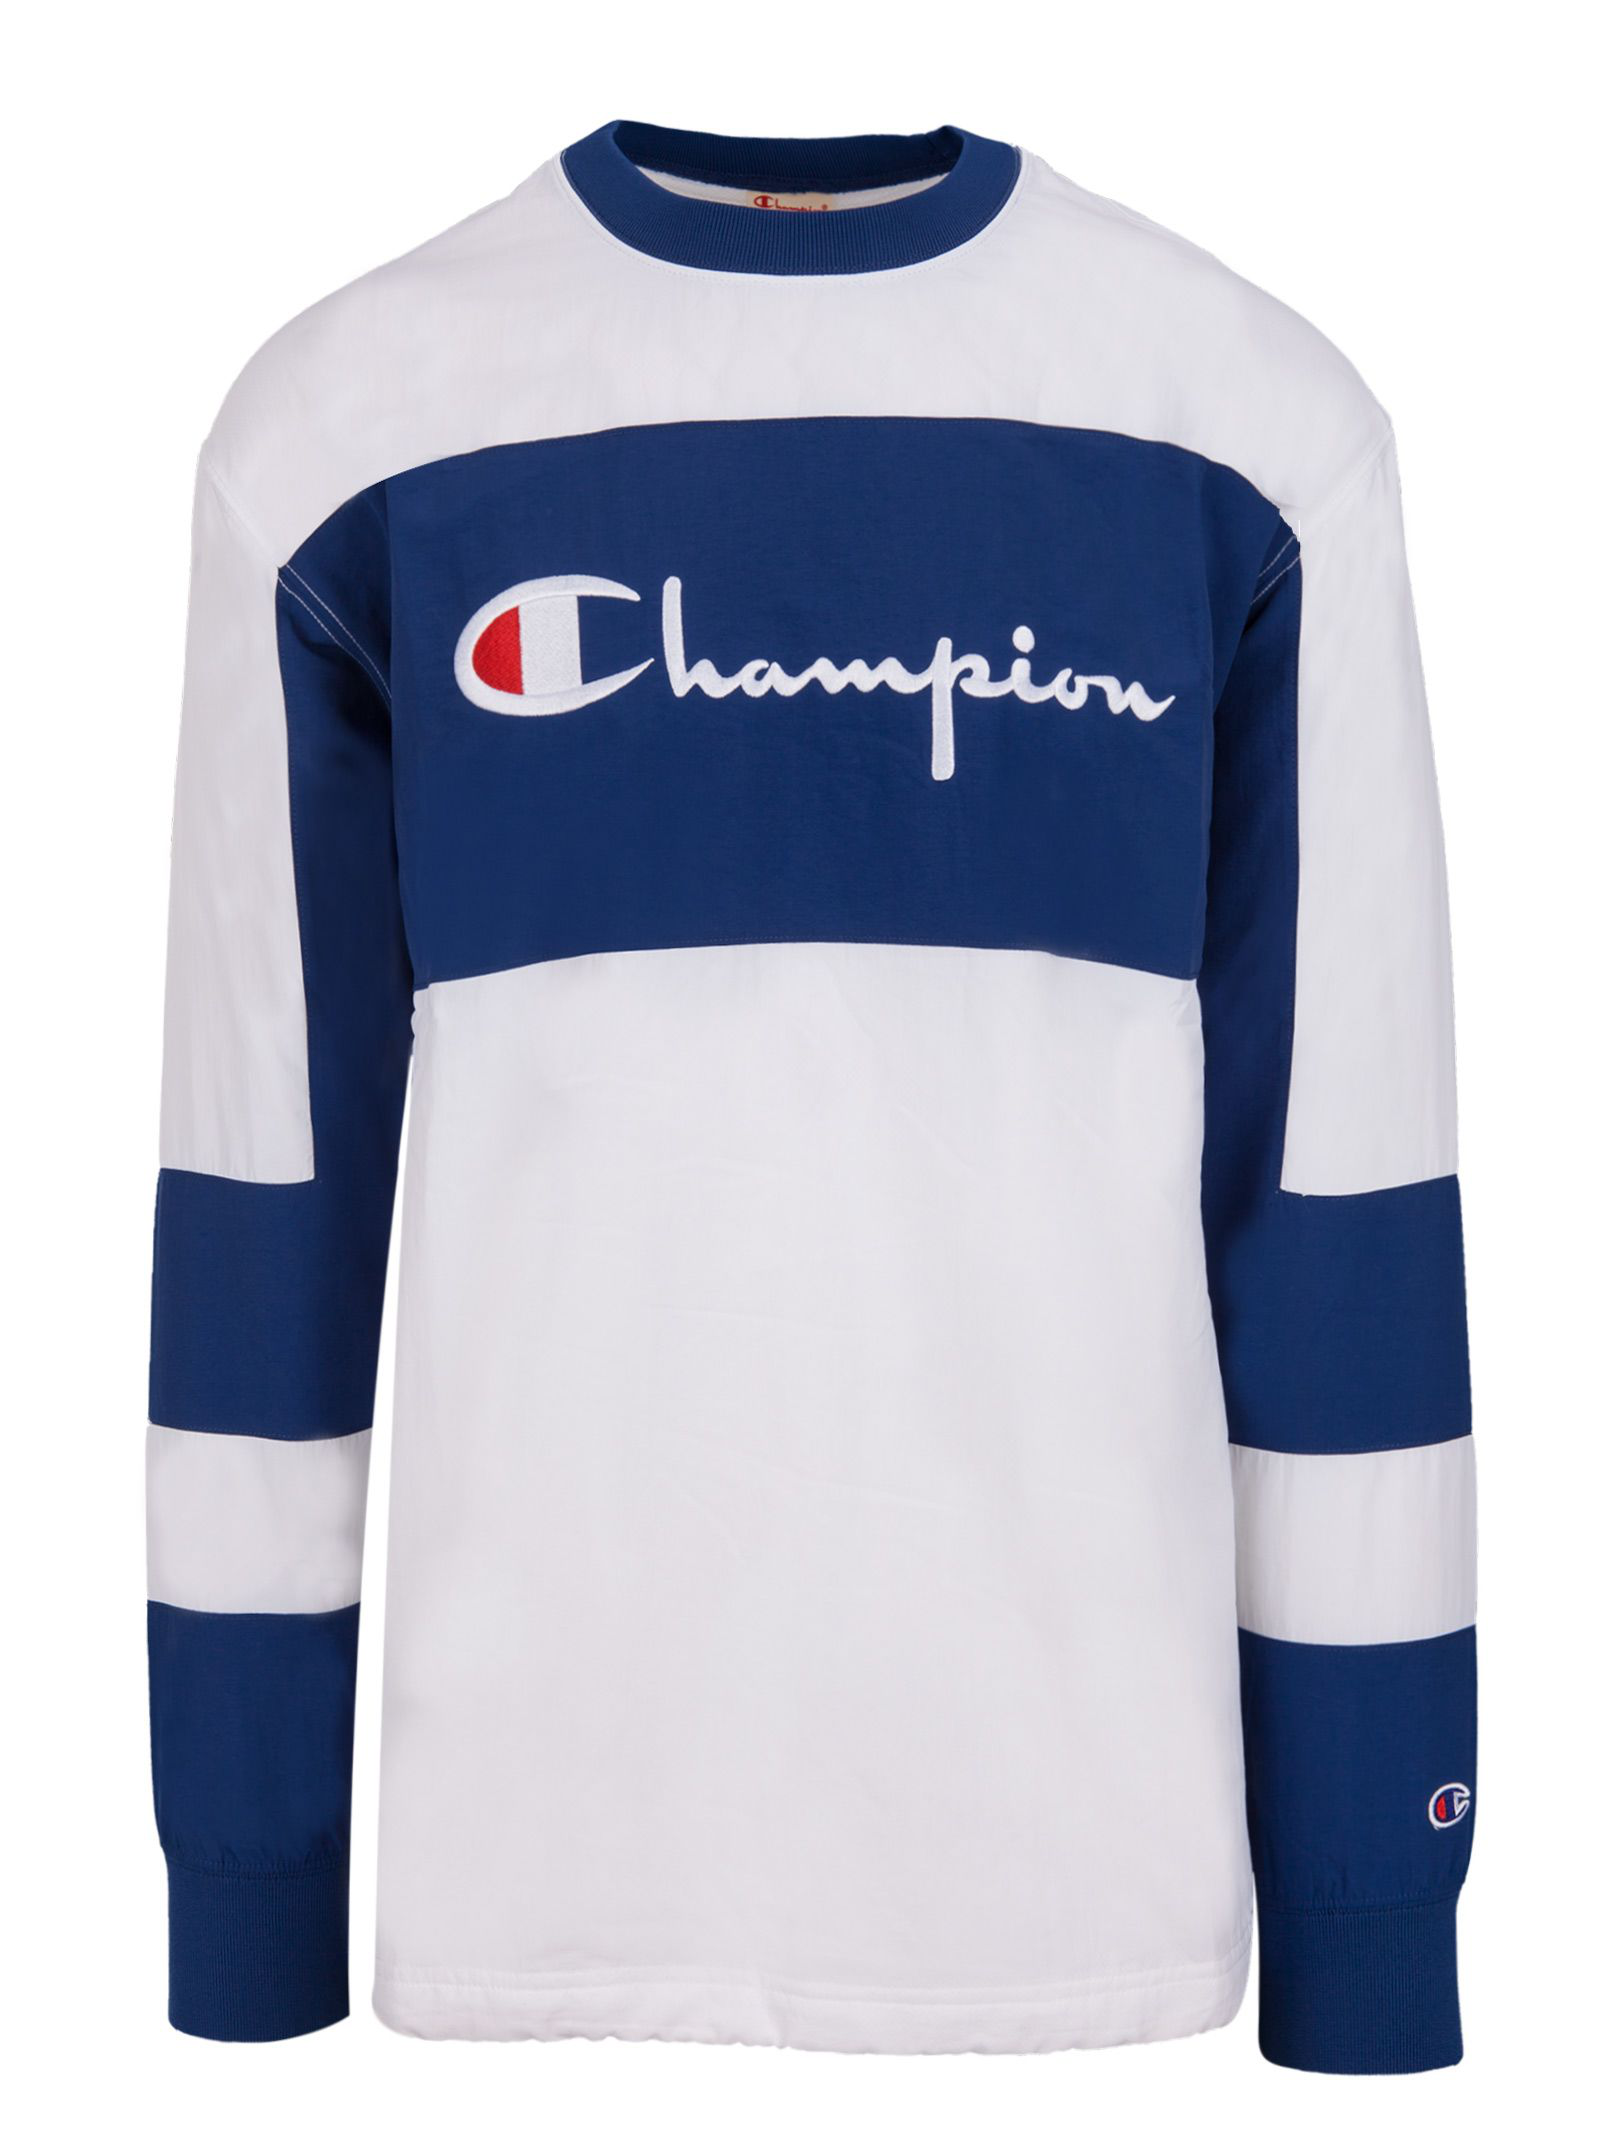 blue and white champion sweatshirt